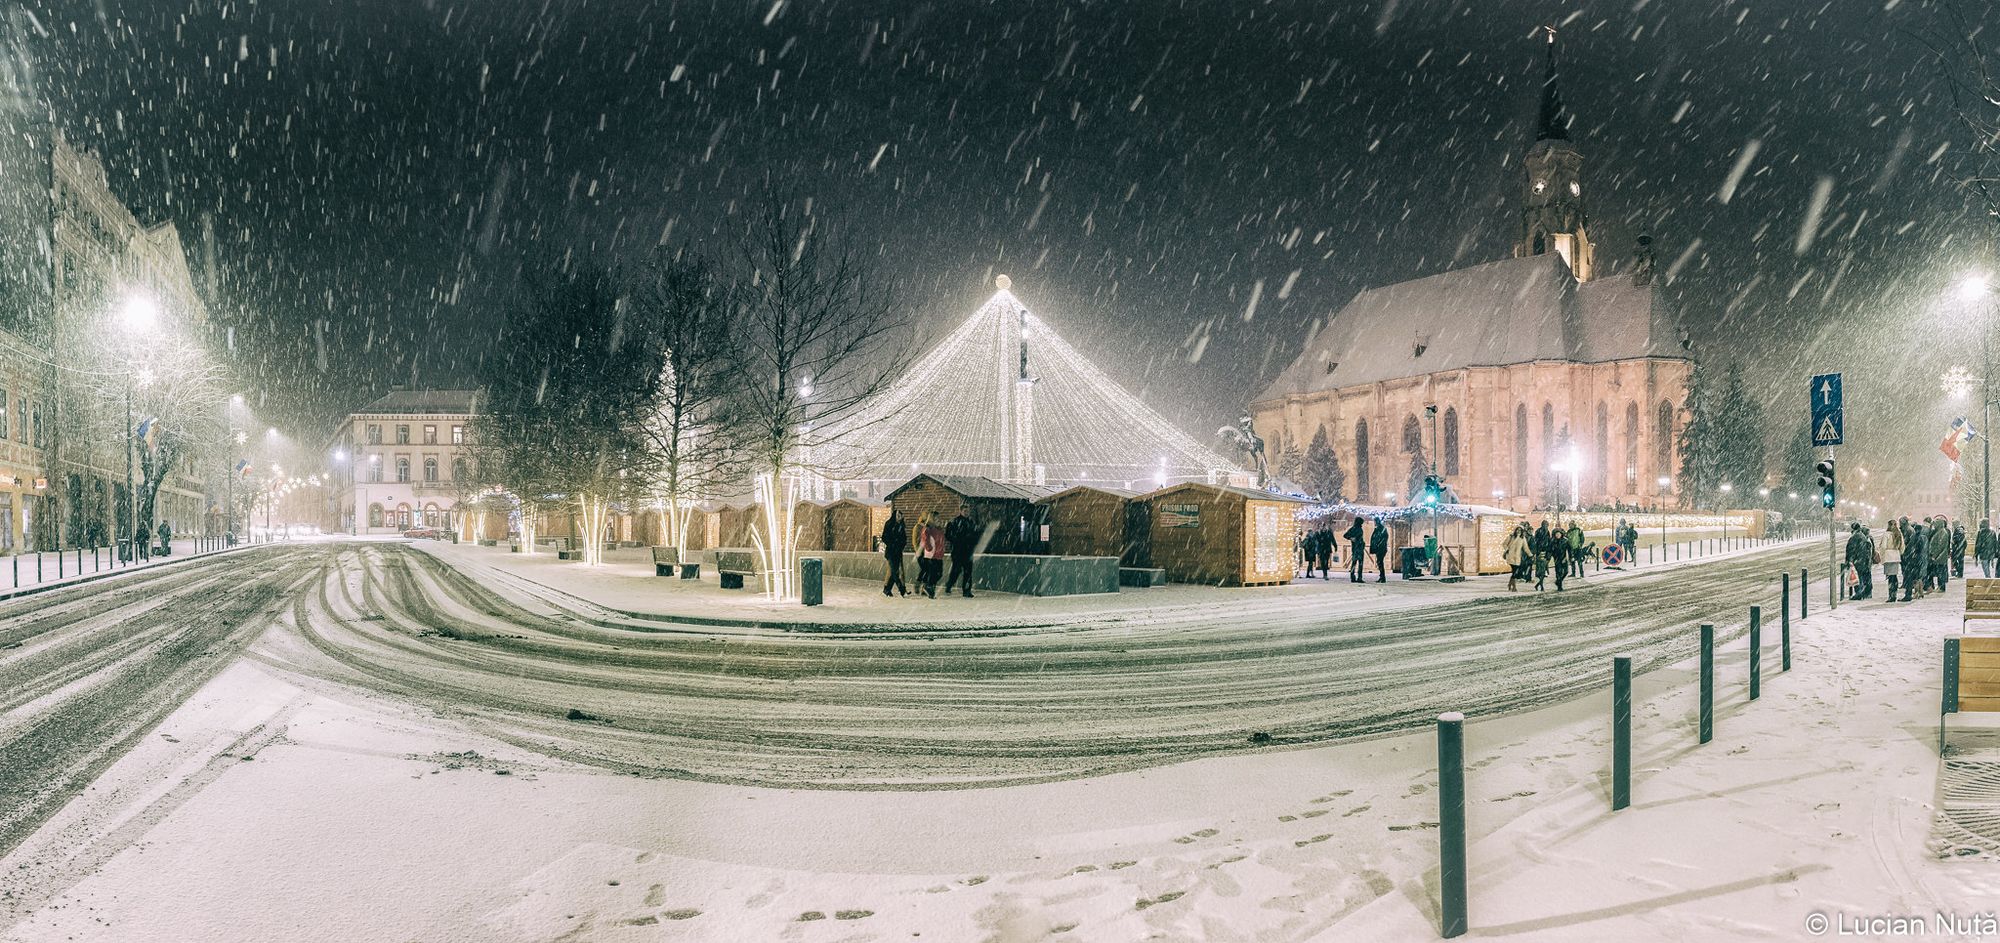 Kolozsvár I Best Christmas Markets in Central-Europe